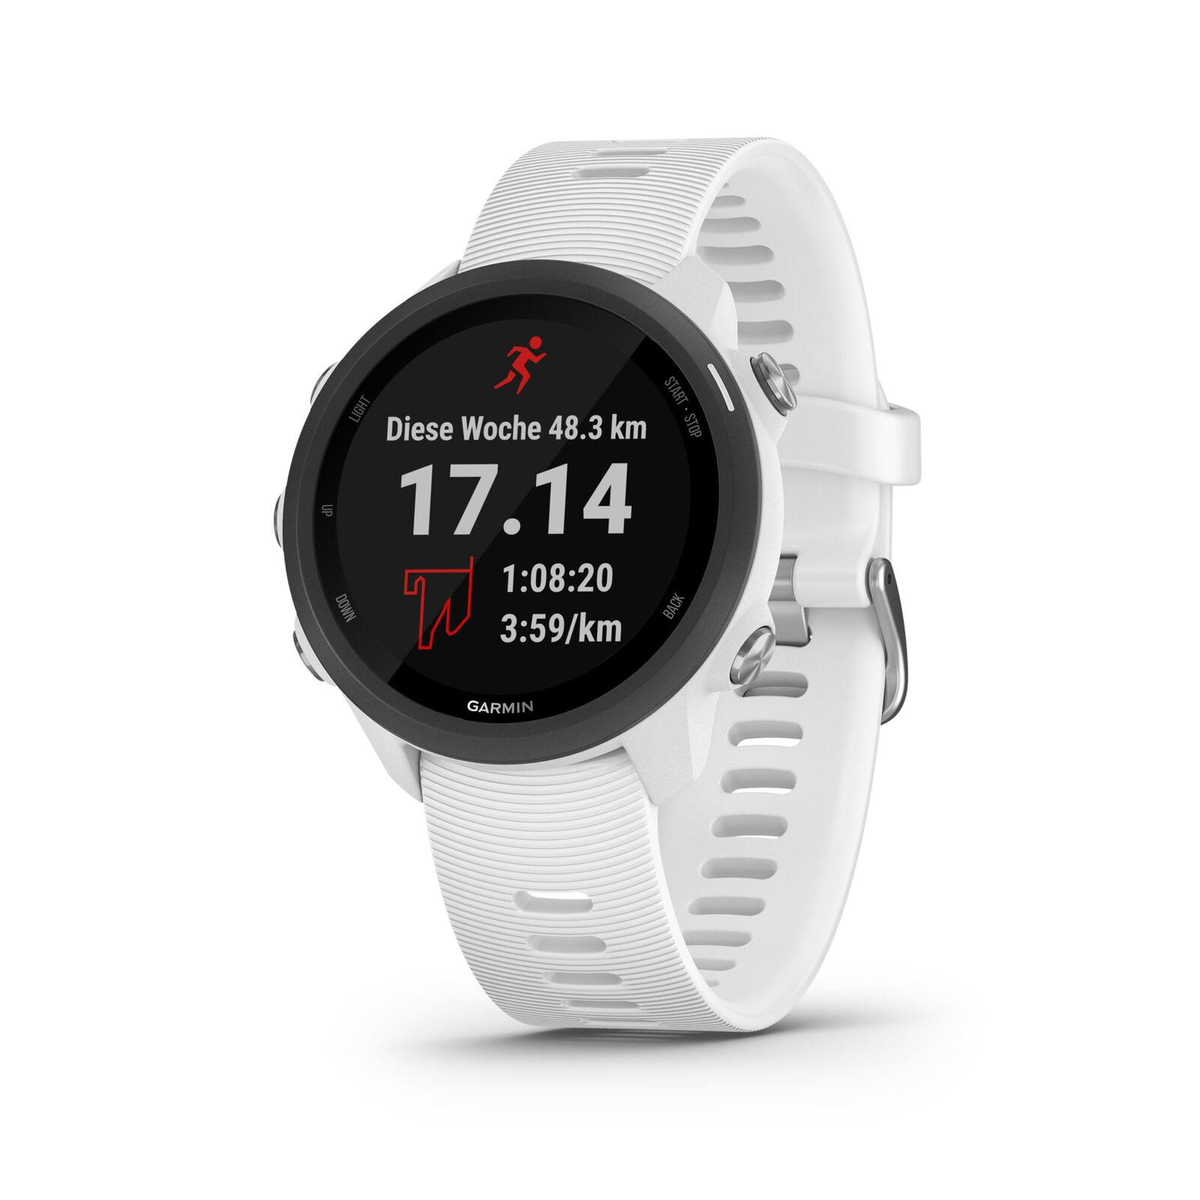 Garmin Forerunner 245 music blanco reloj inteligente 1.2 frec. para correr con gps deportivo bluetooth hasta 7 0100212031 423 12